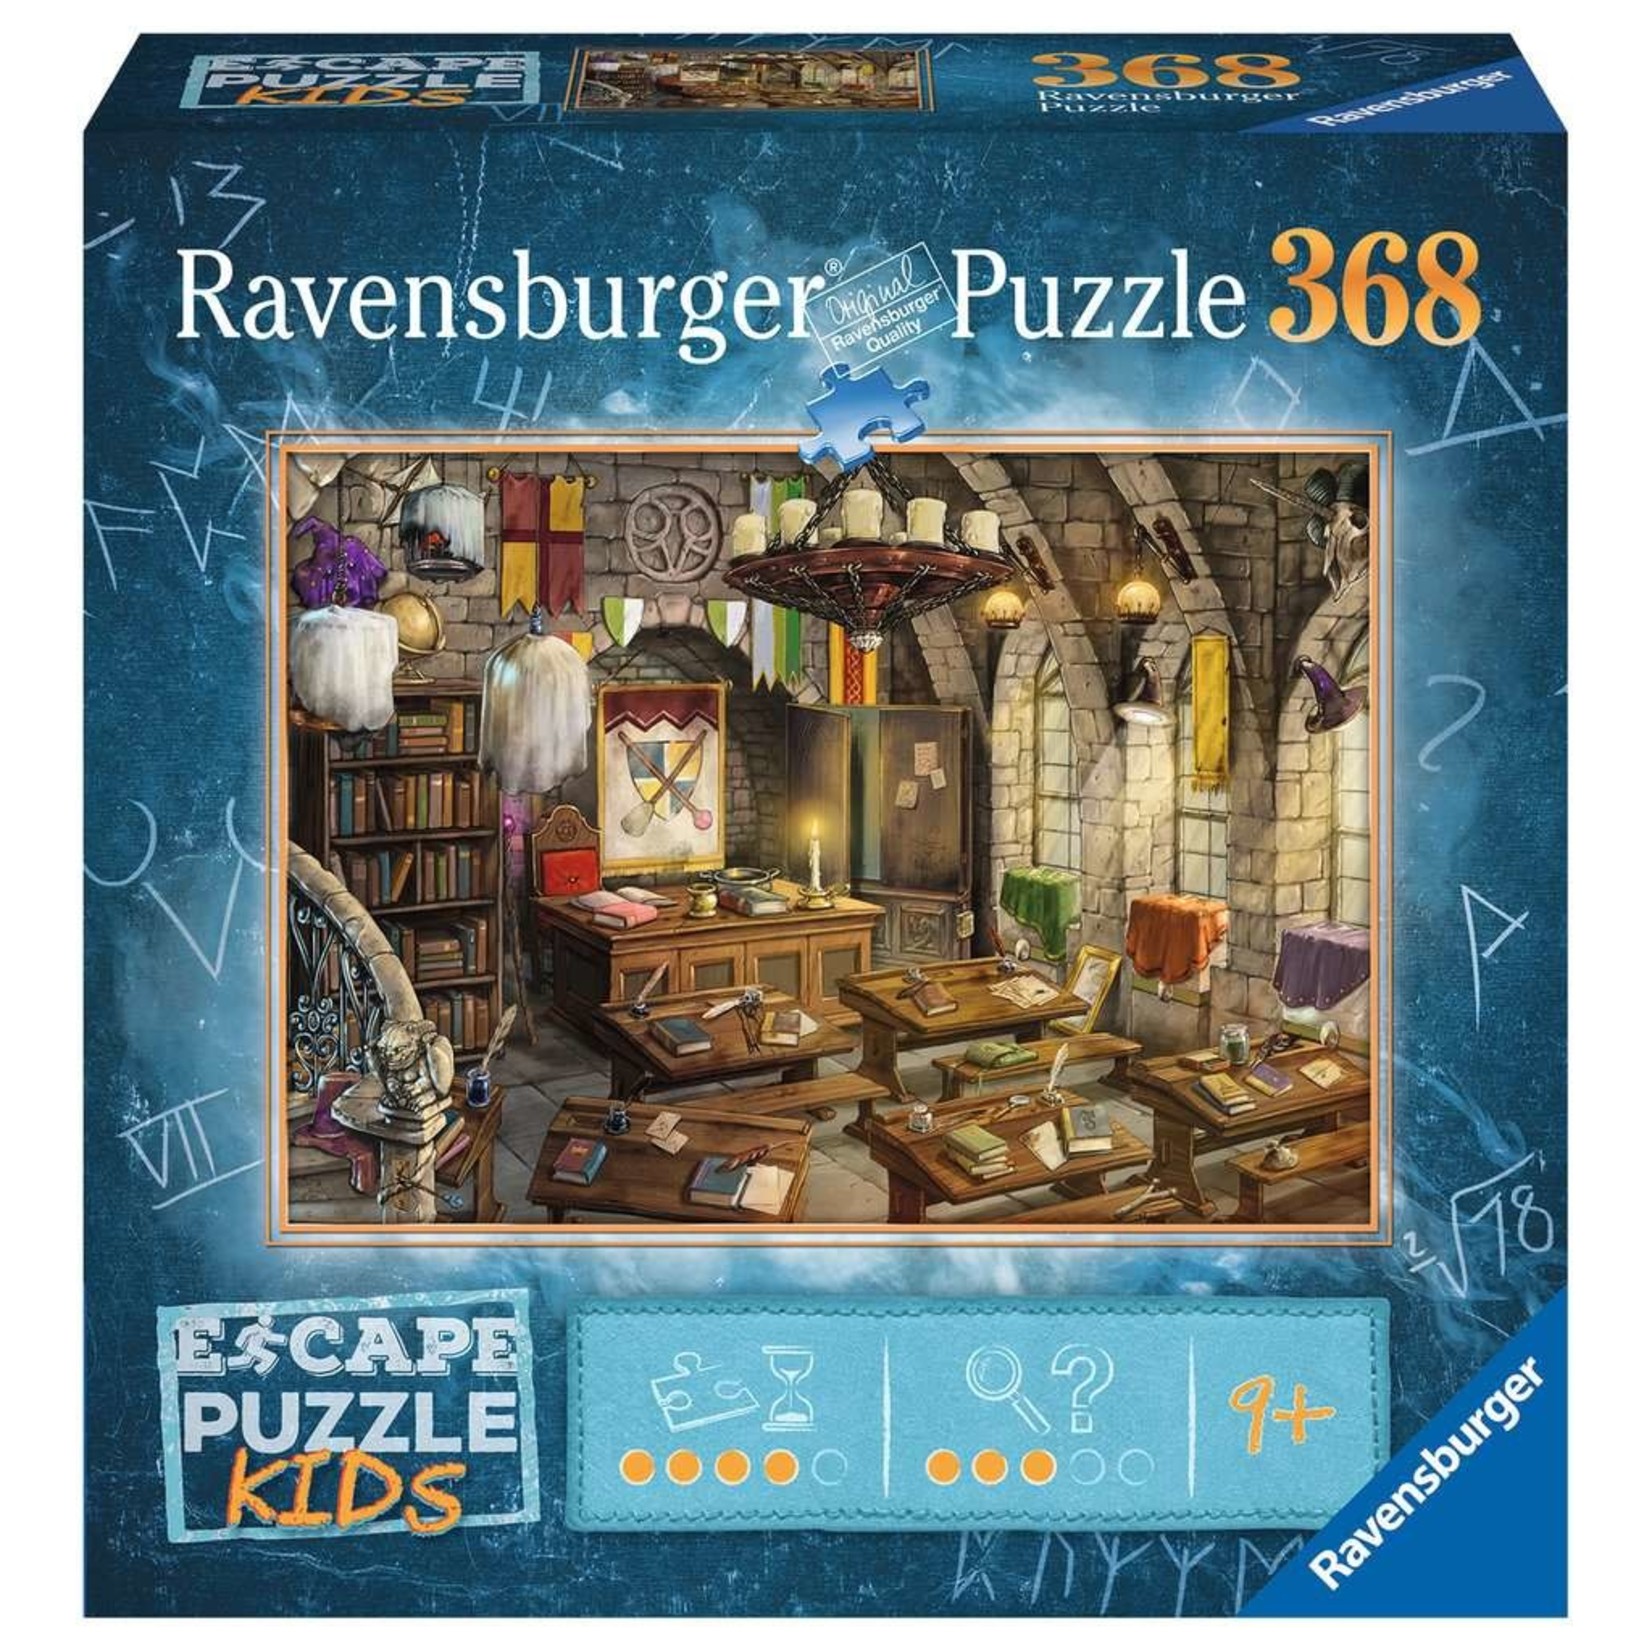 Ravensburger RAV13303 Escape Puzzle Kids Magical Mayhem (Puzzle368)